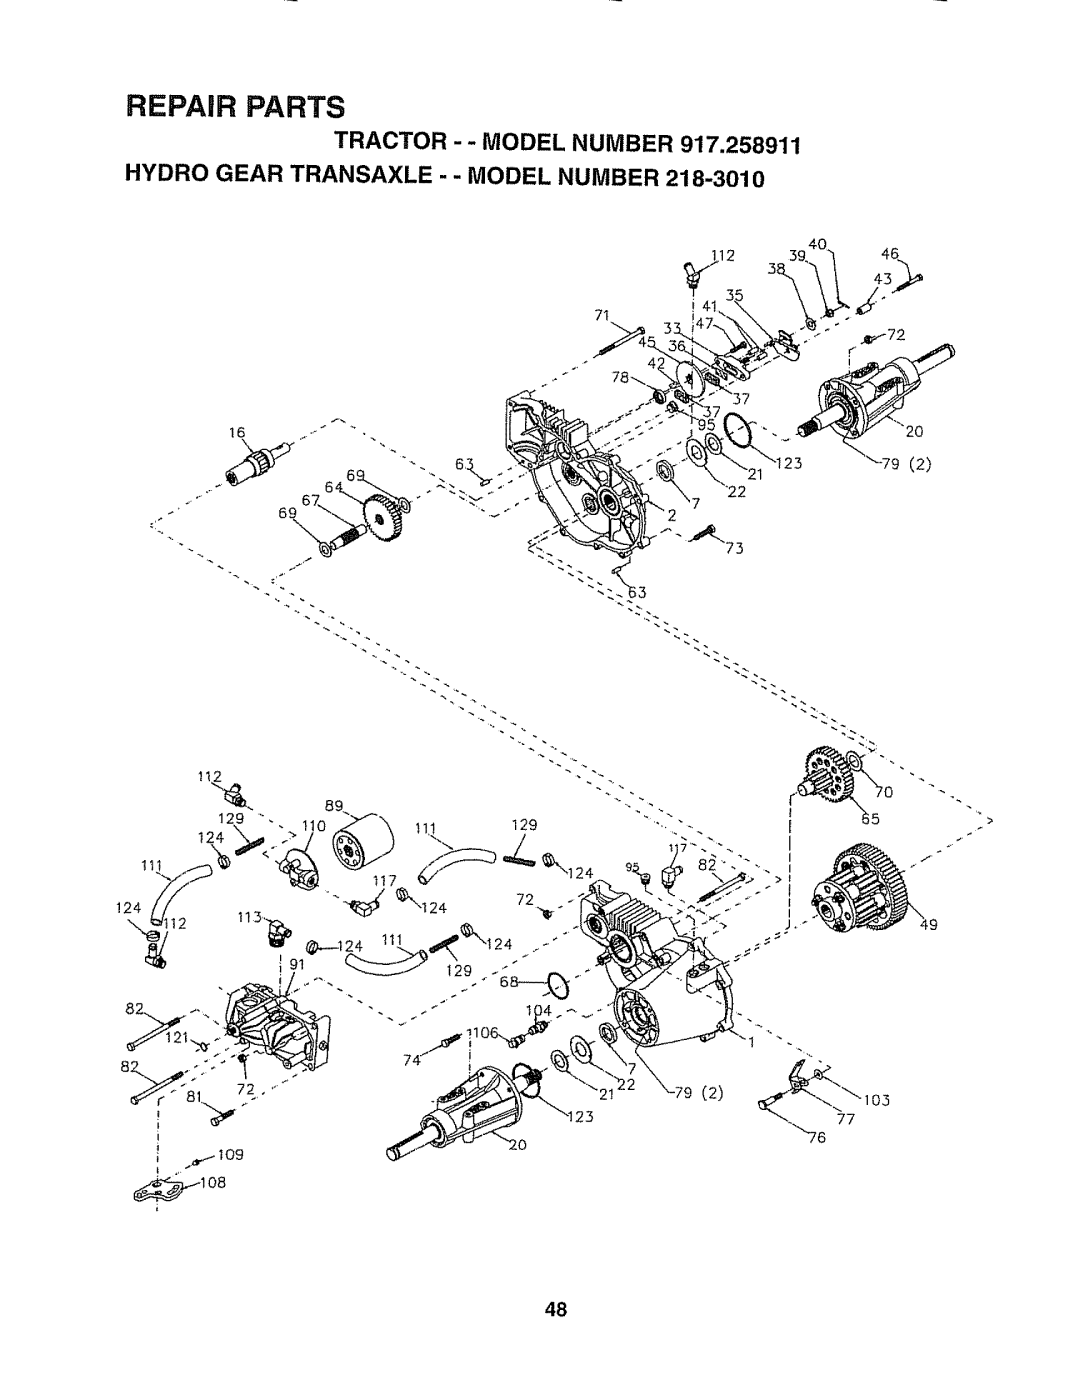 Craftsman 917.258911 owner manual TRACTOR - - MODEL NUMBER 917,258911, Hydro Gear Transaxle . . Model Number, Repair Parts 